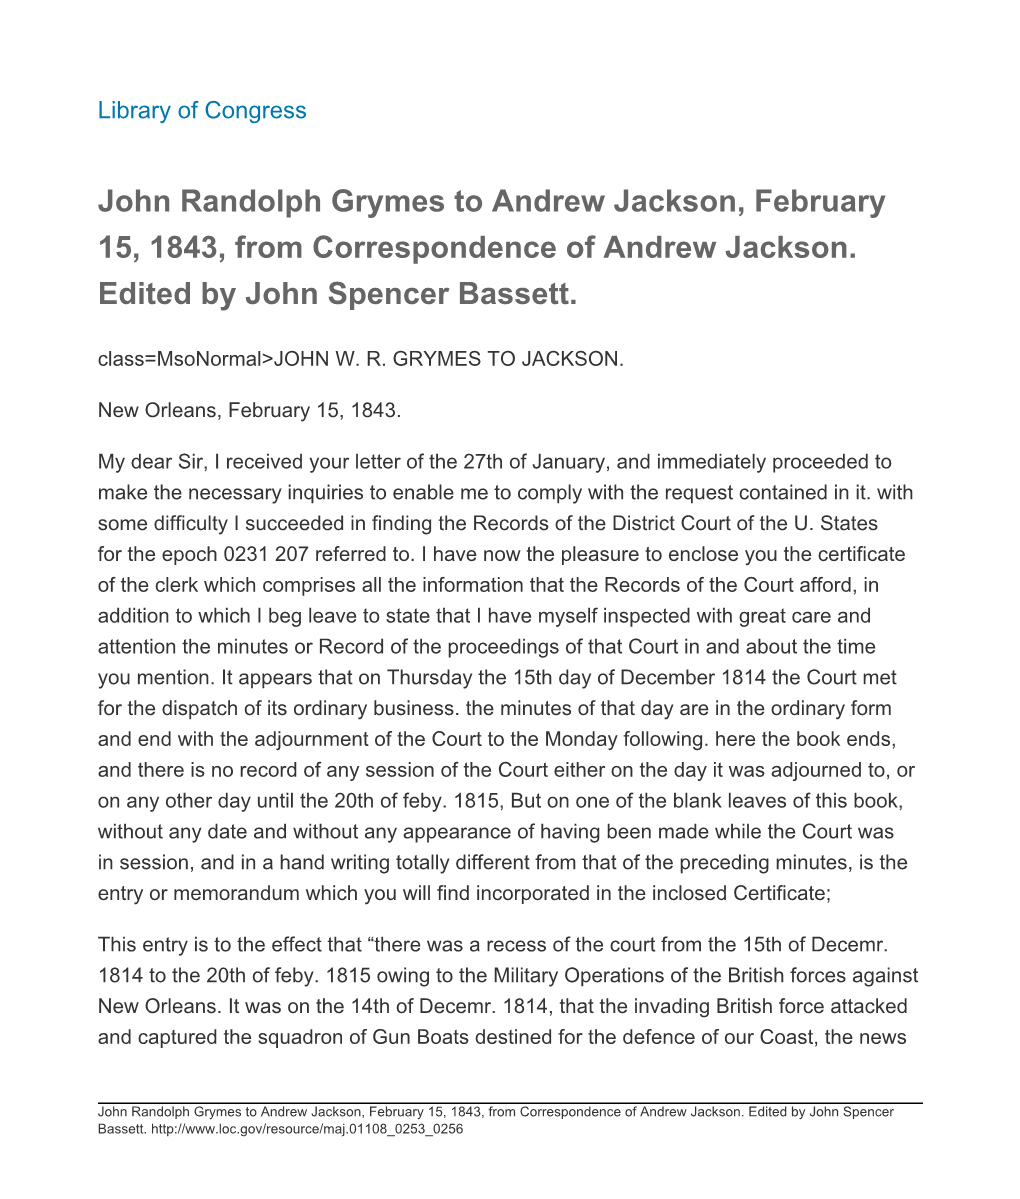 John Randolph Grymes to Andrew Jackson, February 15, 1843, from Correspondence of Andrew Jackson